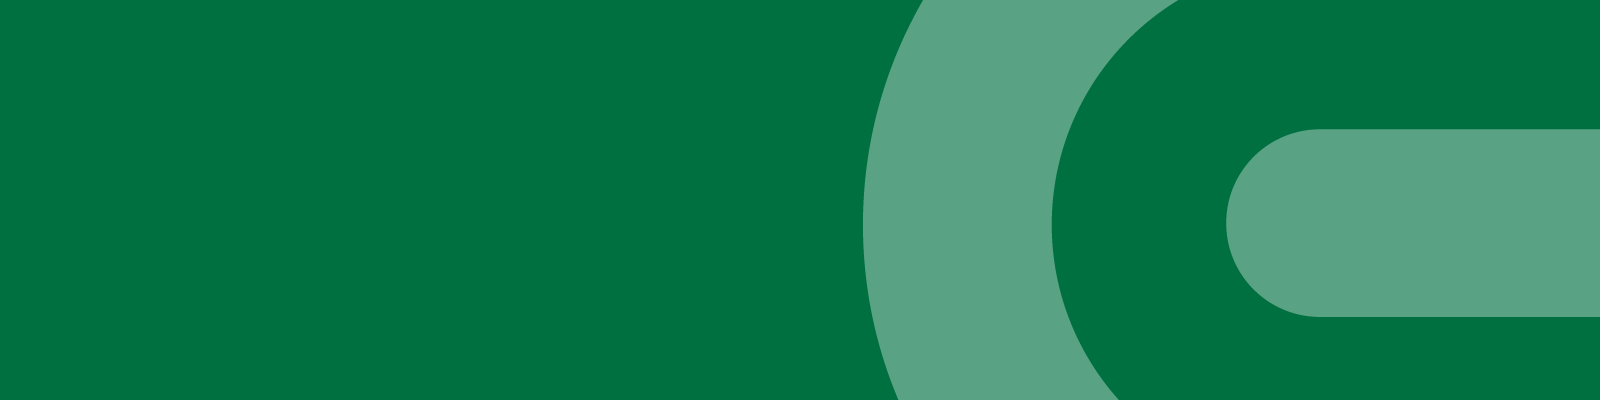 Banner Big C Green